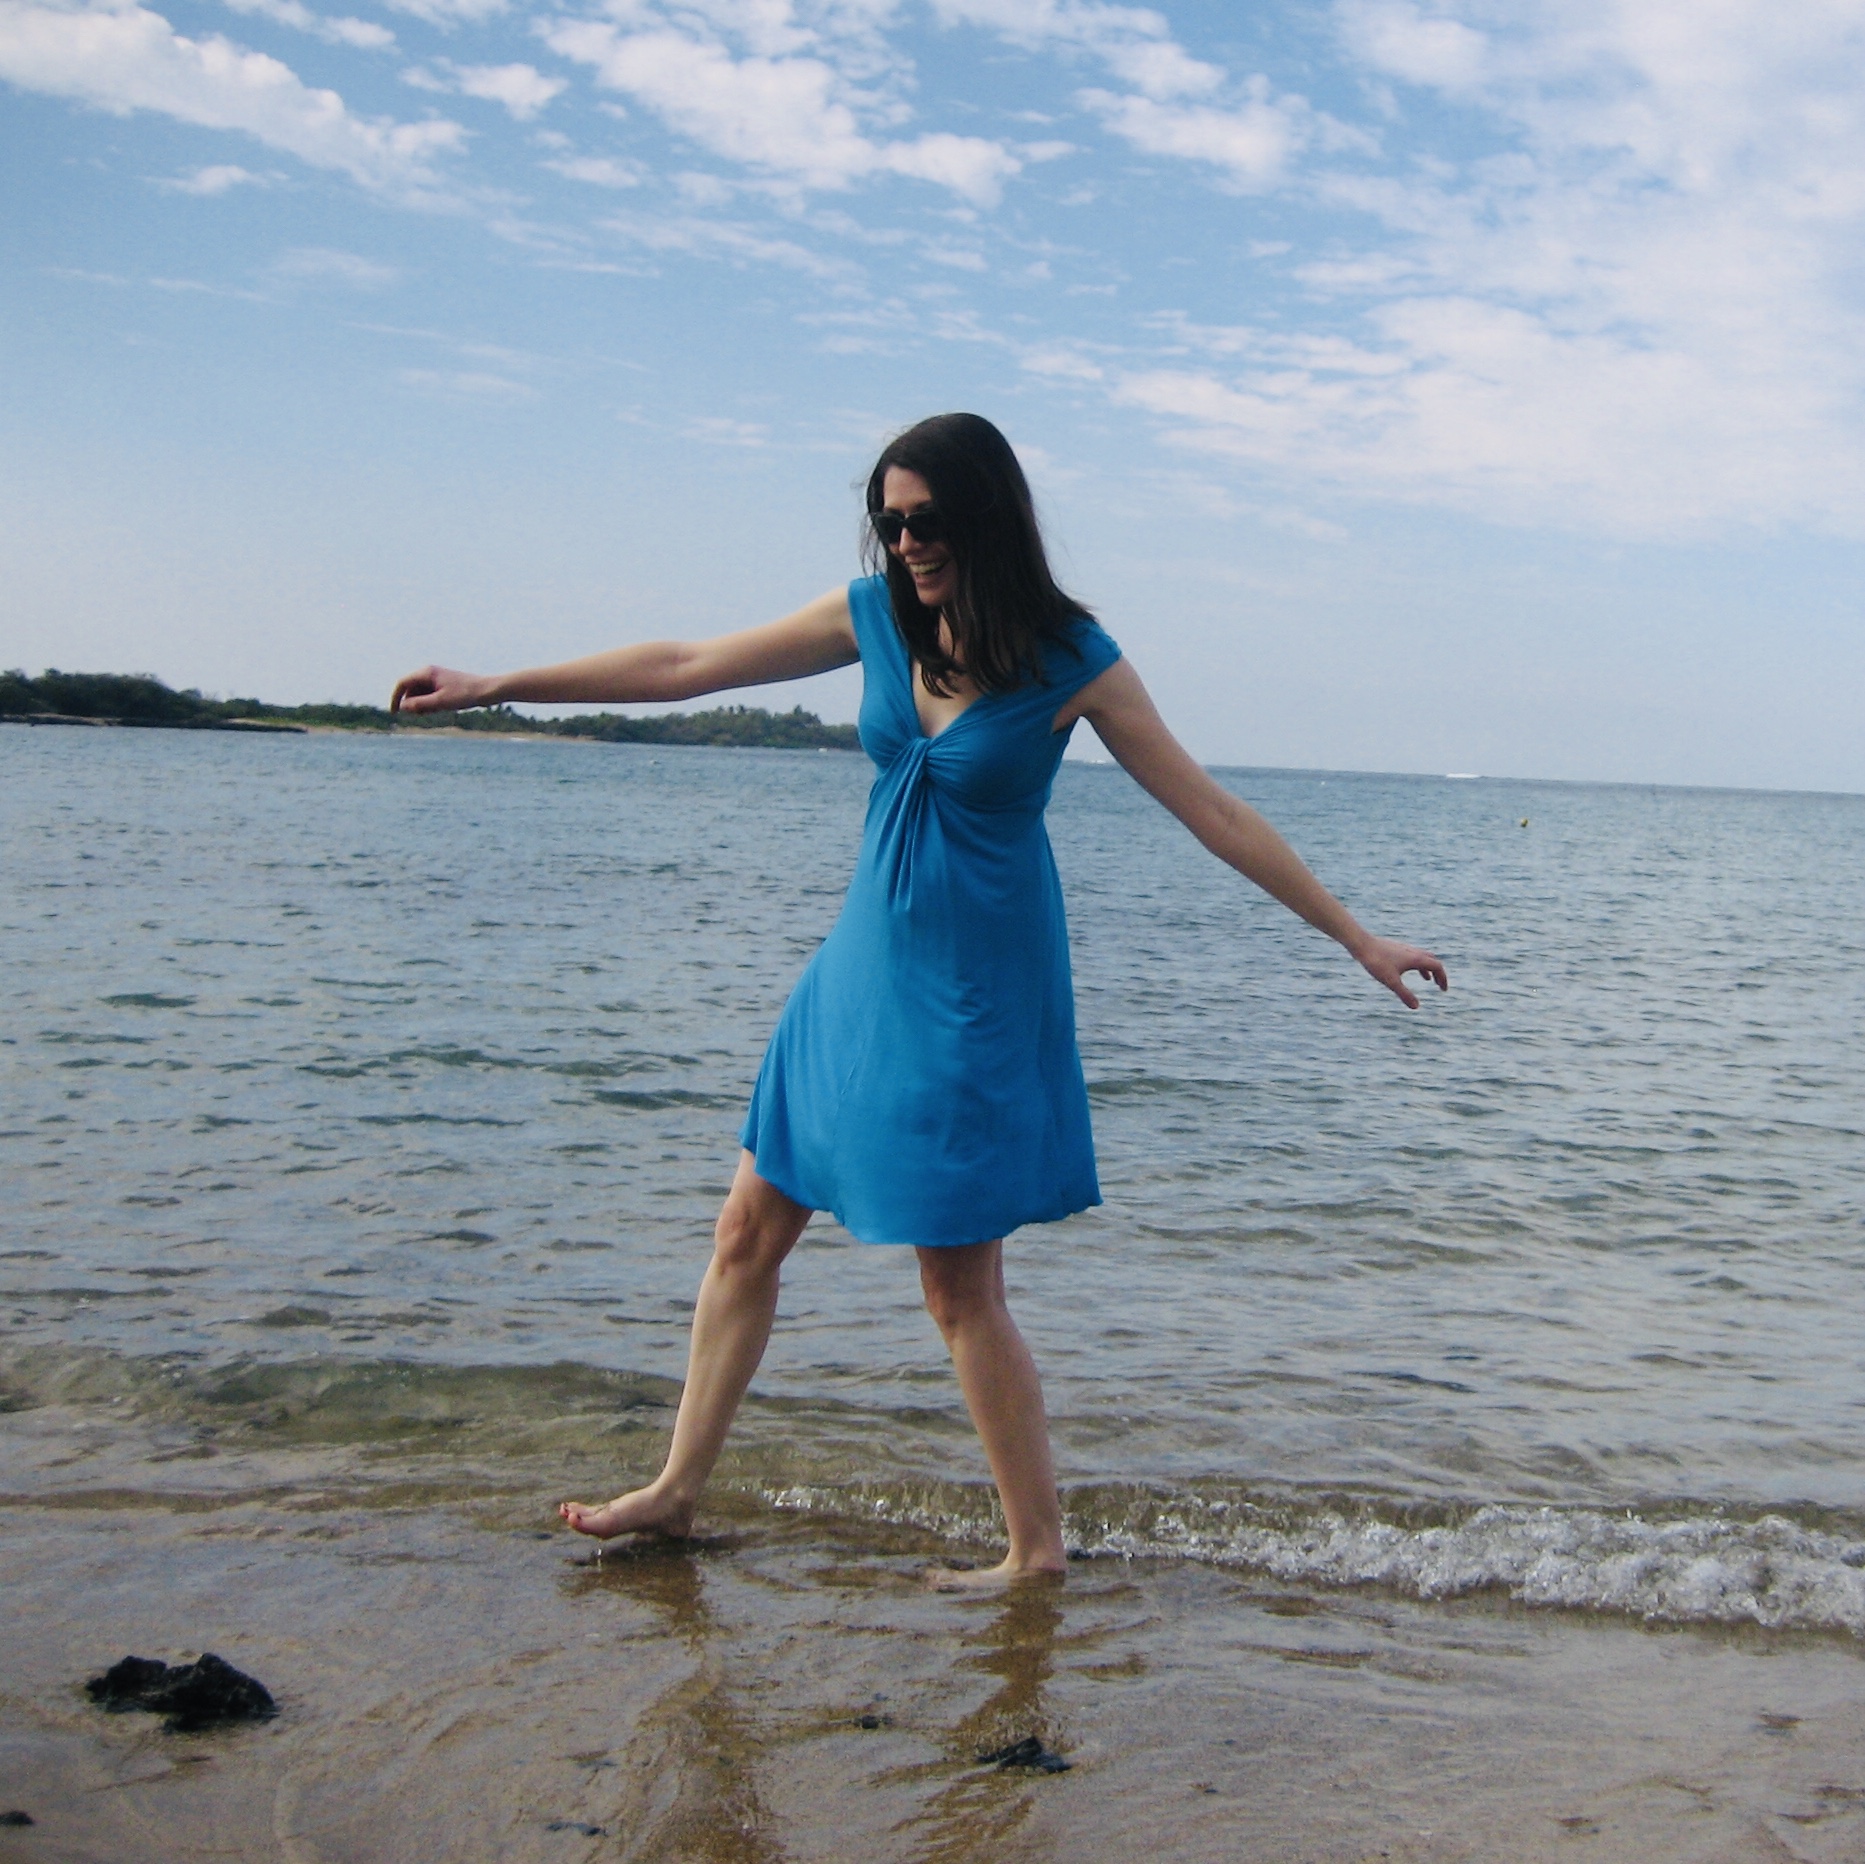 Amanda dancing on the beach